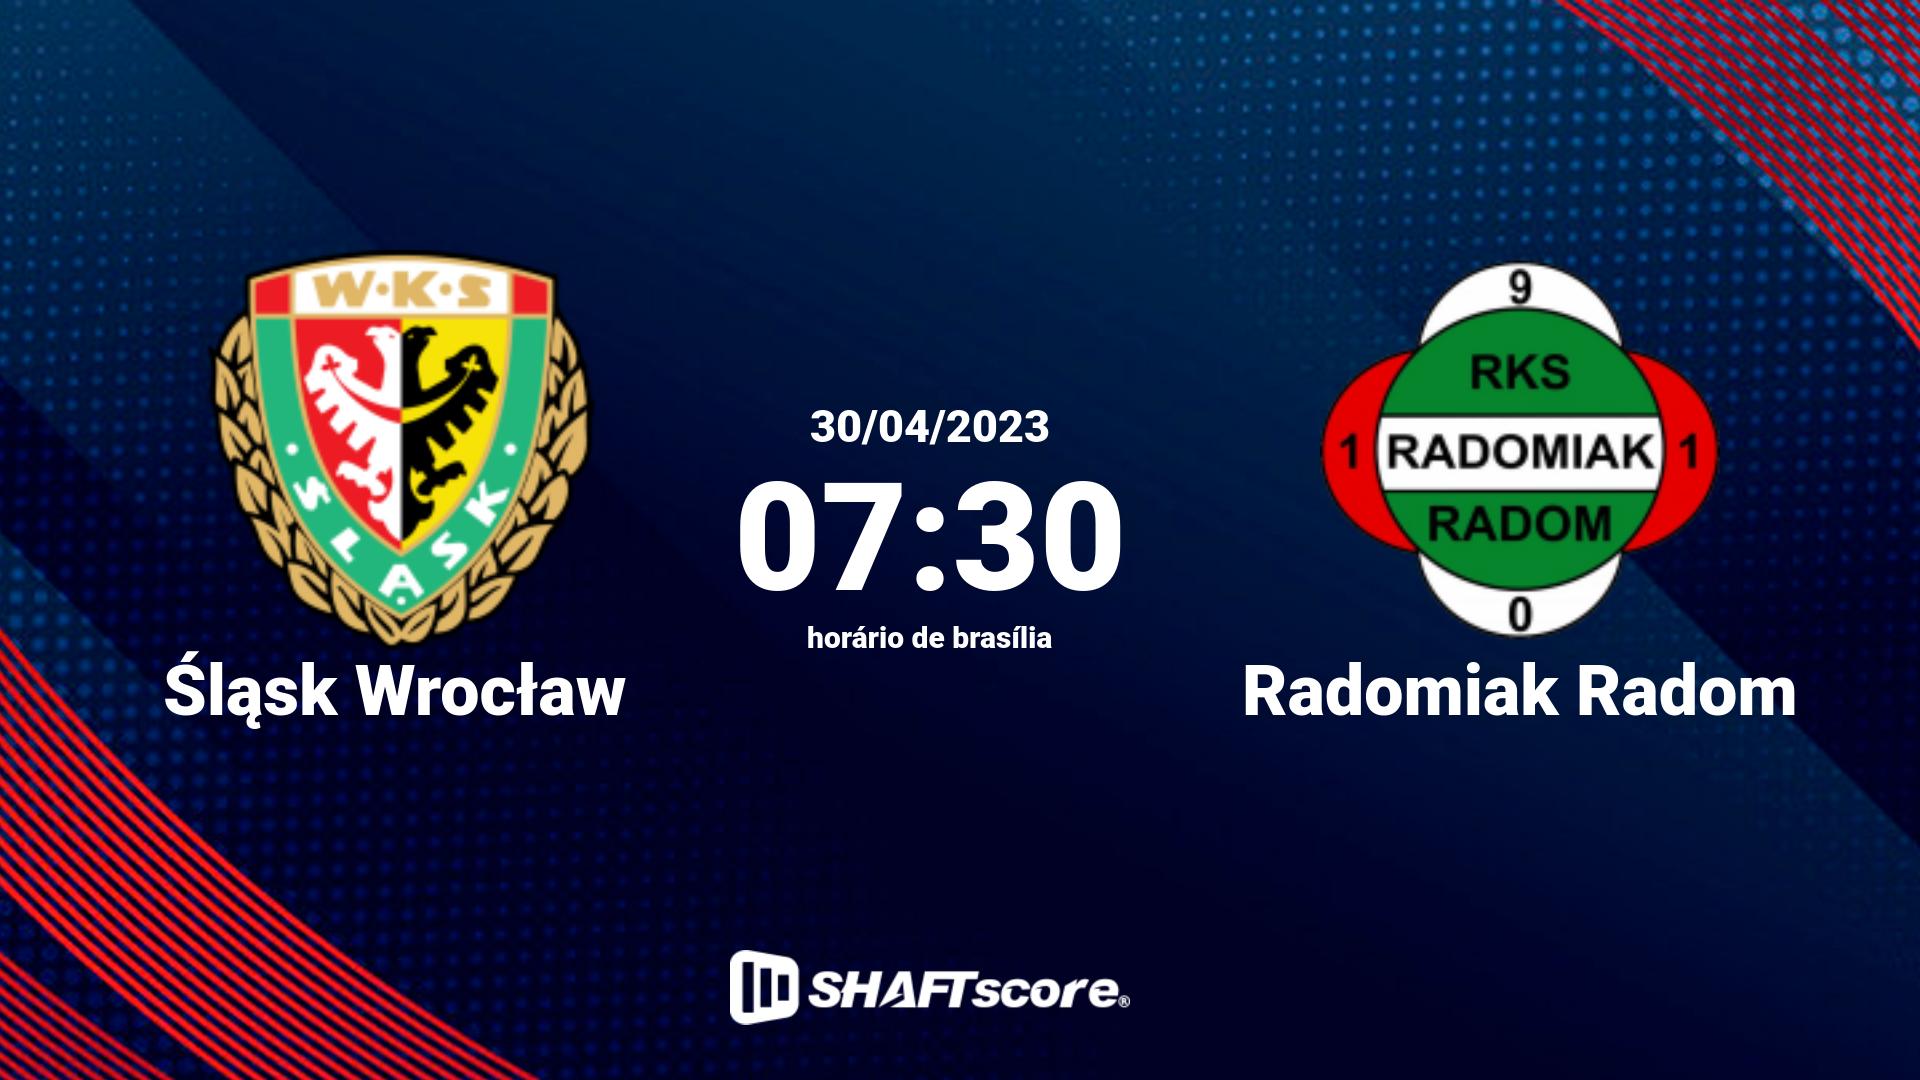 Estatísticas do jogo Śląsk Wrocław vs Radomiak Radom 30.04 07:30